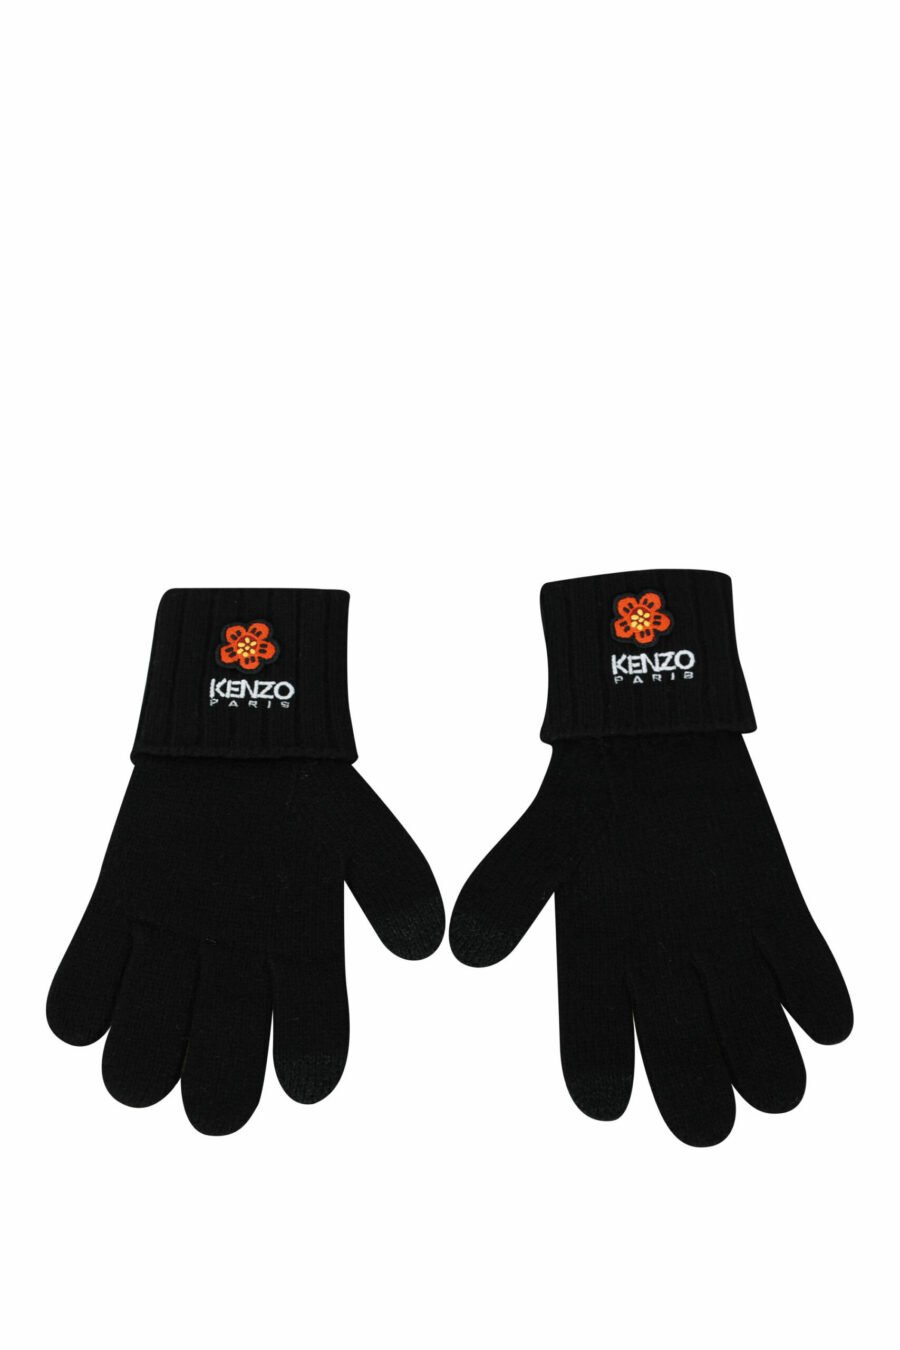 Black gloves with "boke flower" logo - 3612230566804 1 scaled